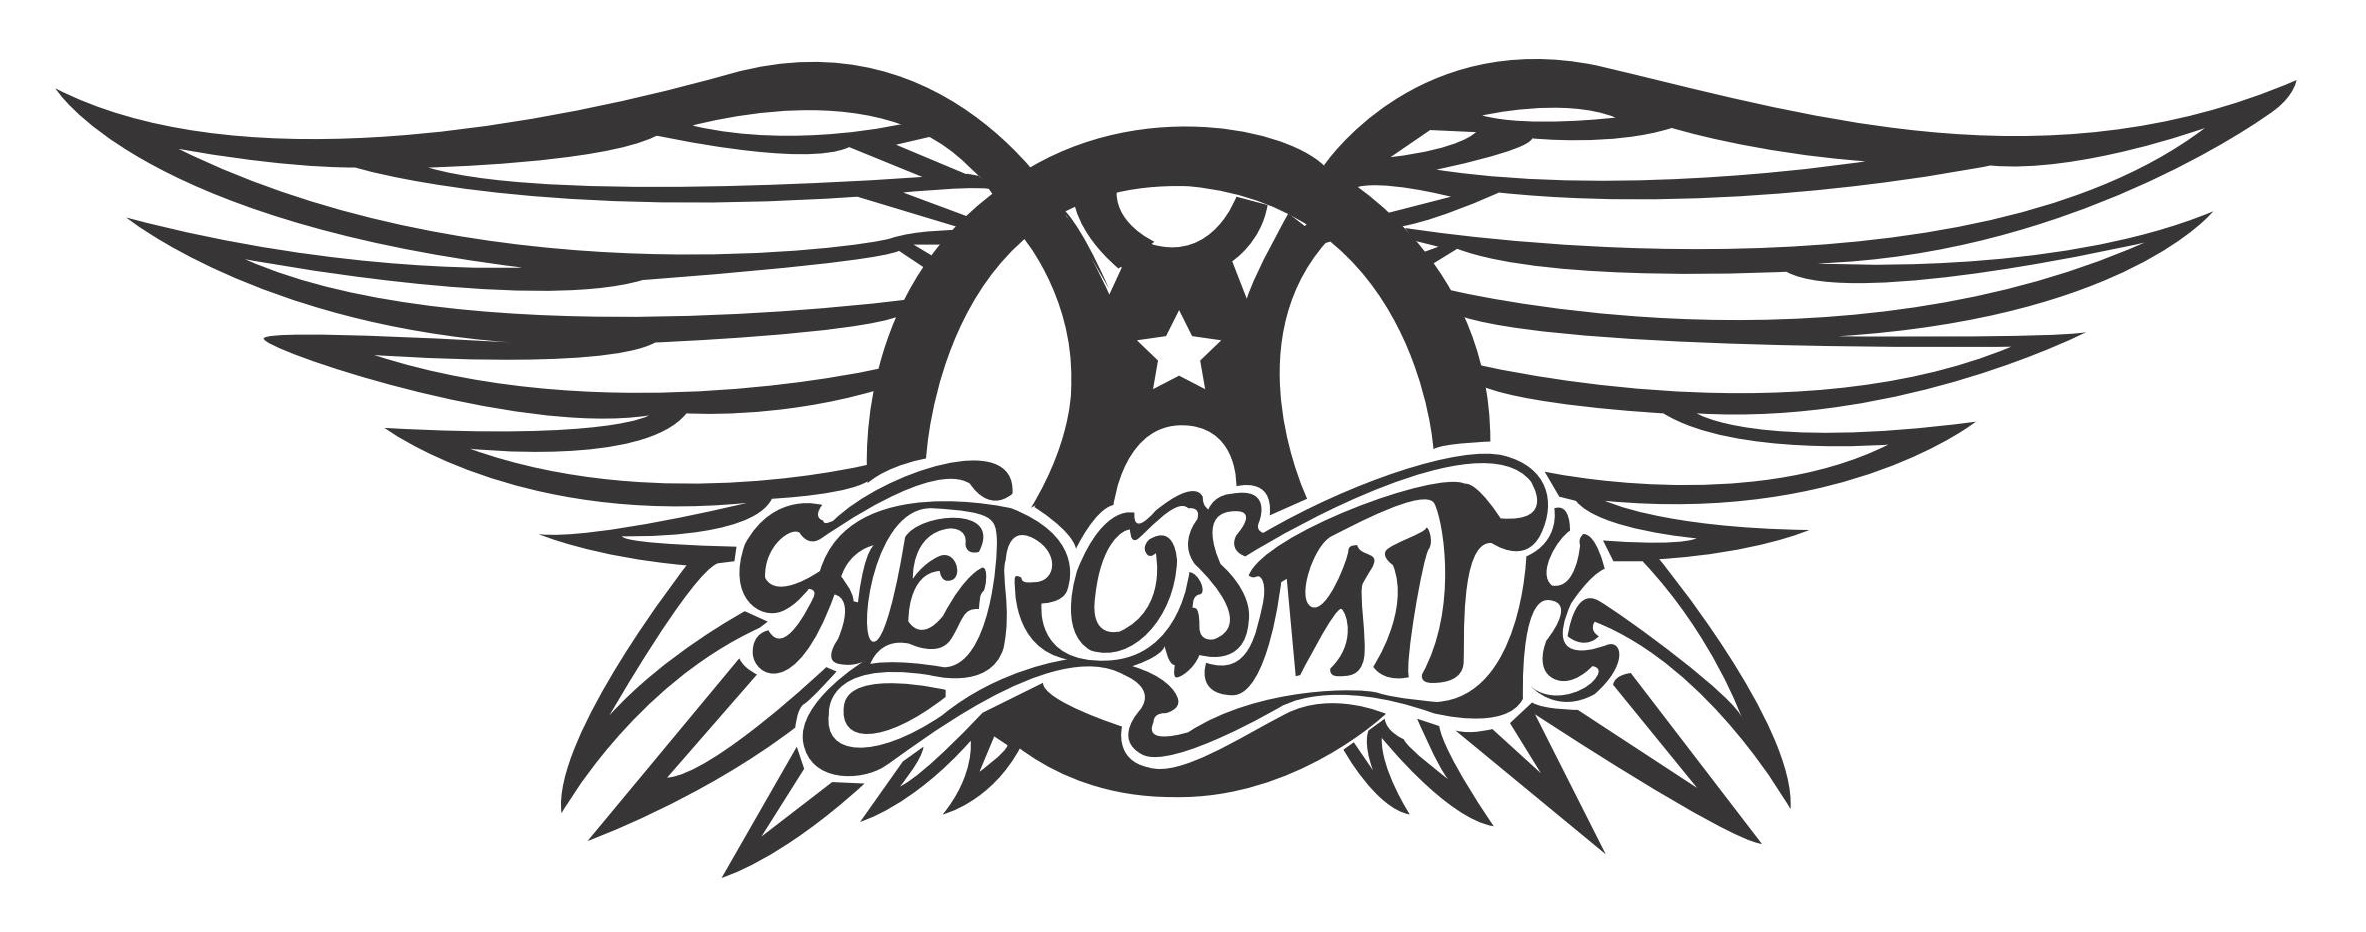 Aerosmith Logo [Eps File] - Aerosmith Music Vector, Transparent background PNG HD thumbnail